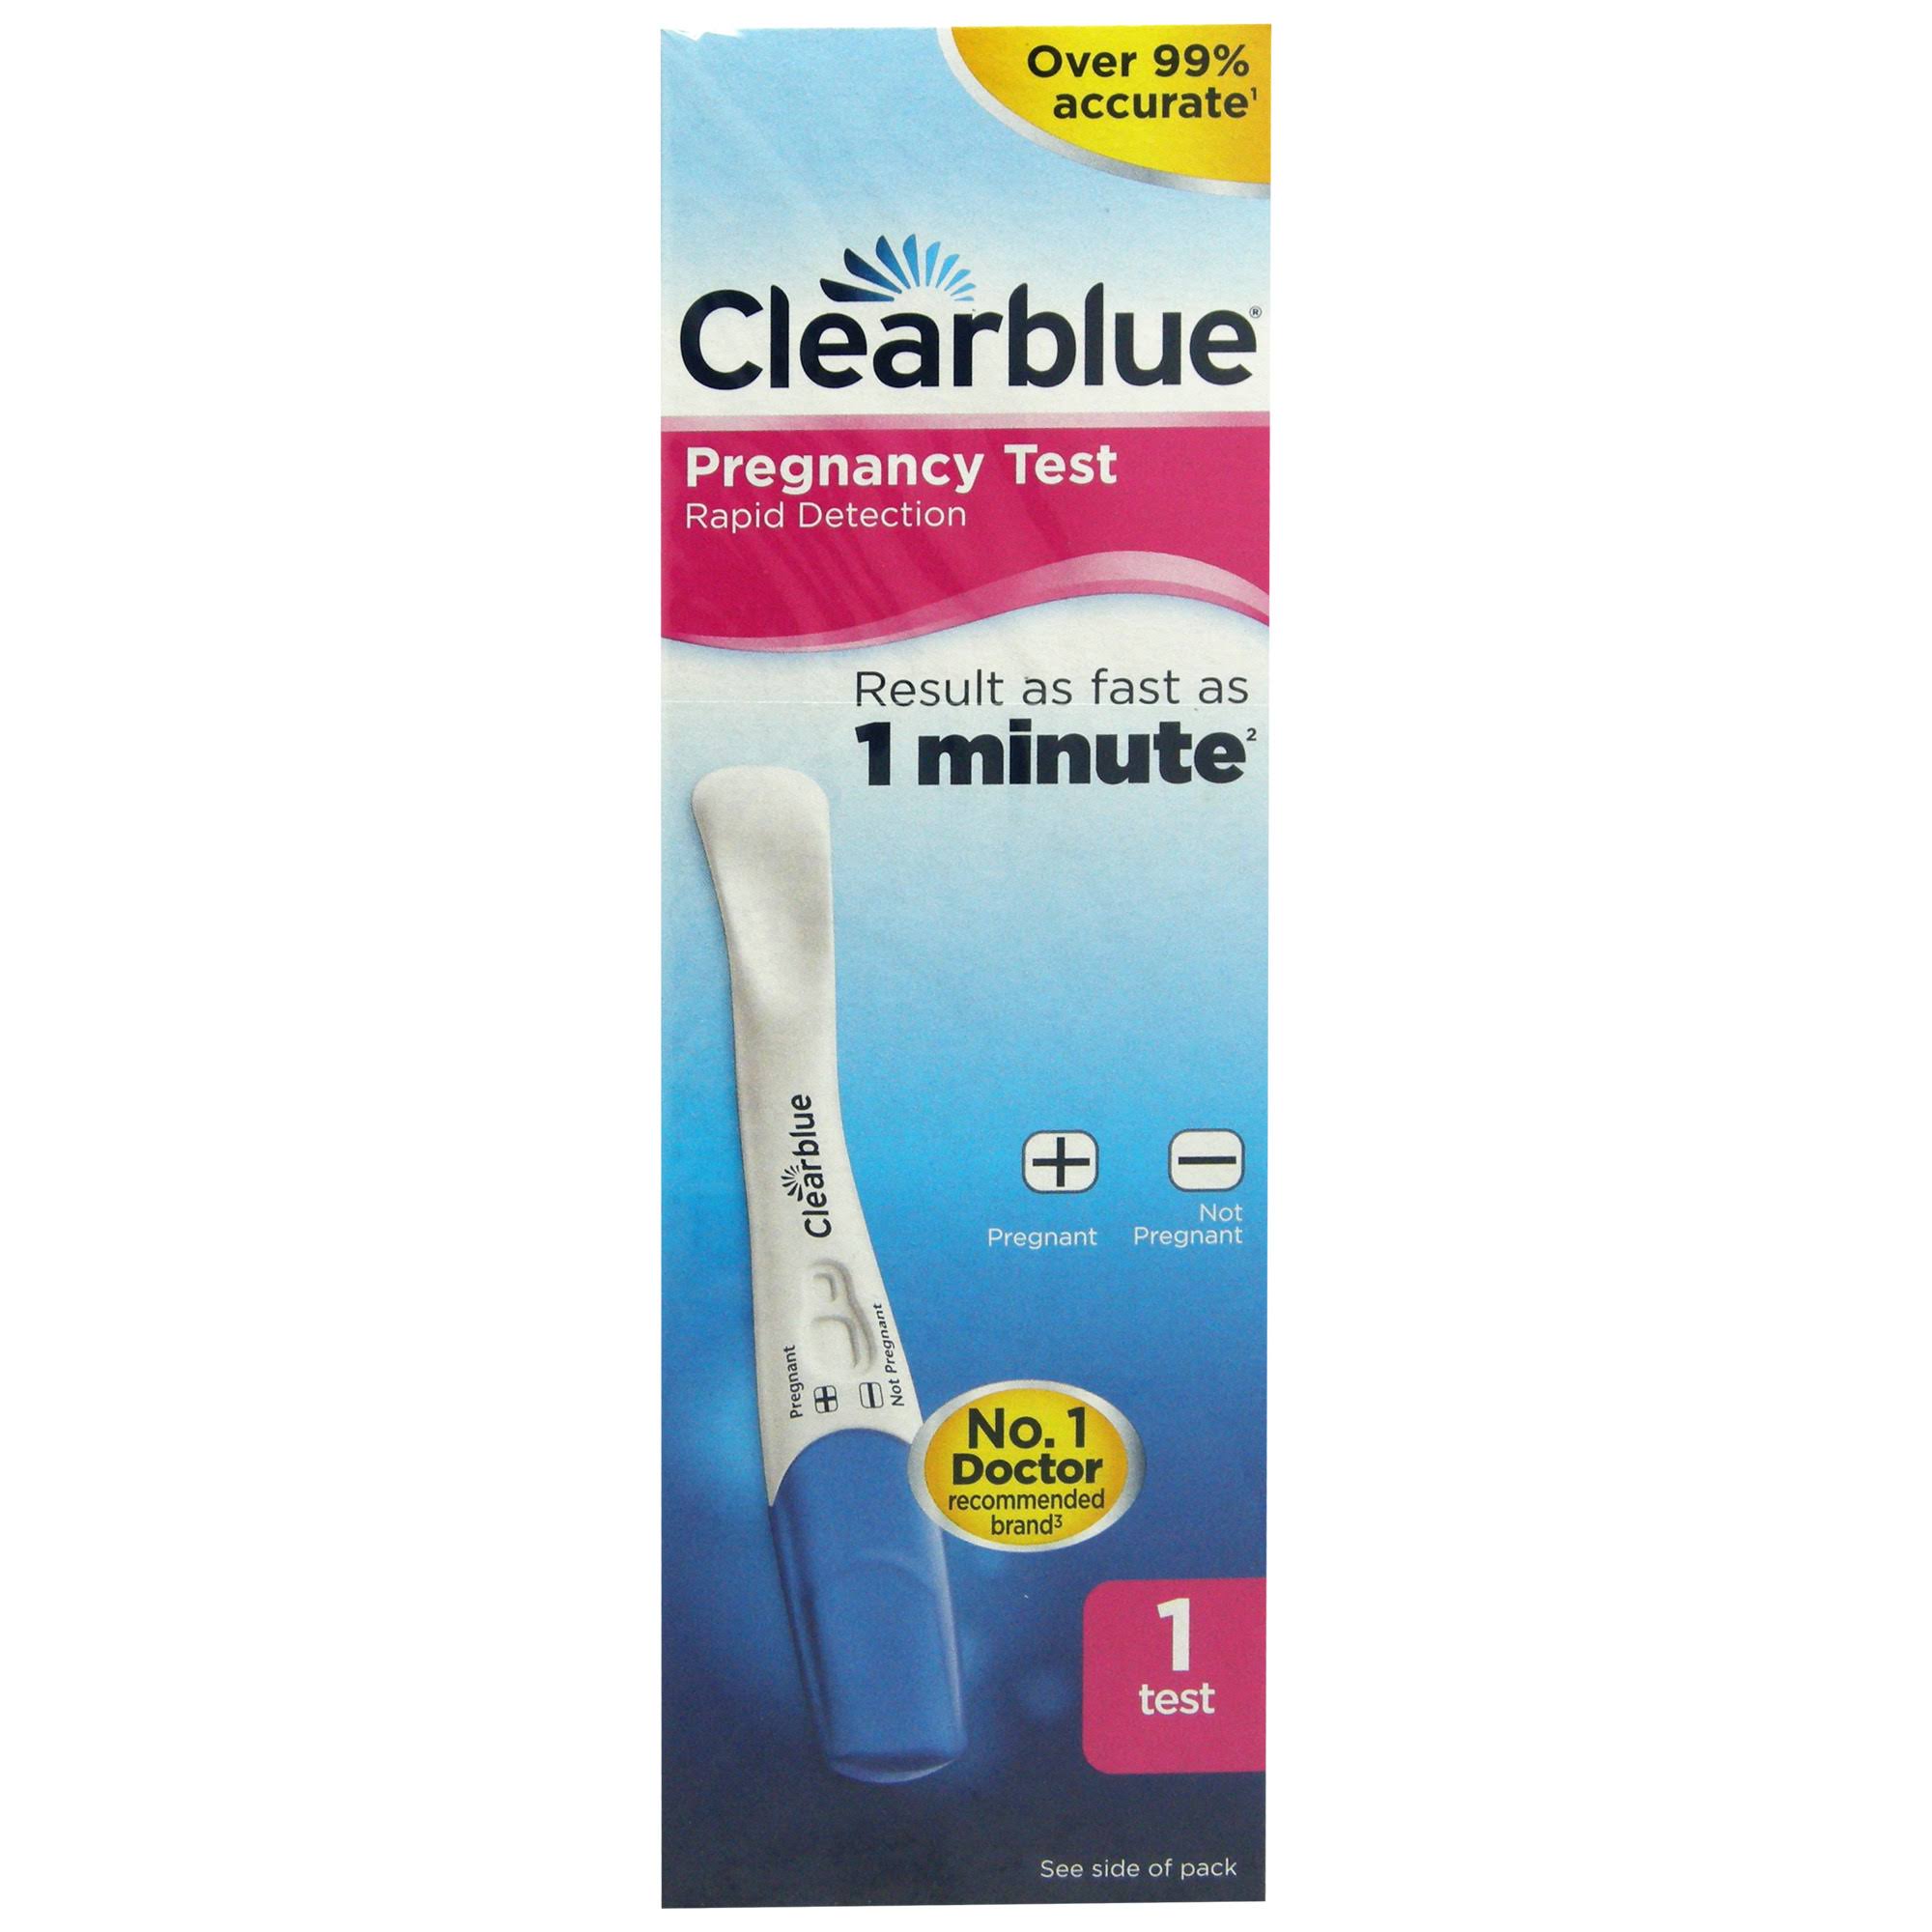 Clearblue Plus Pregnancy Test Kit